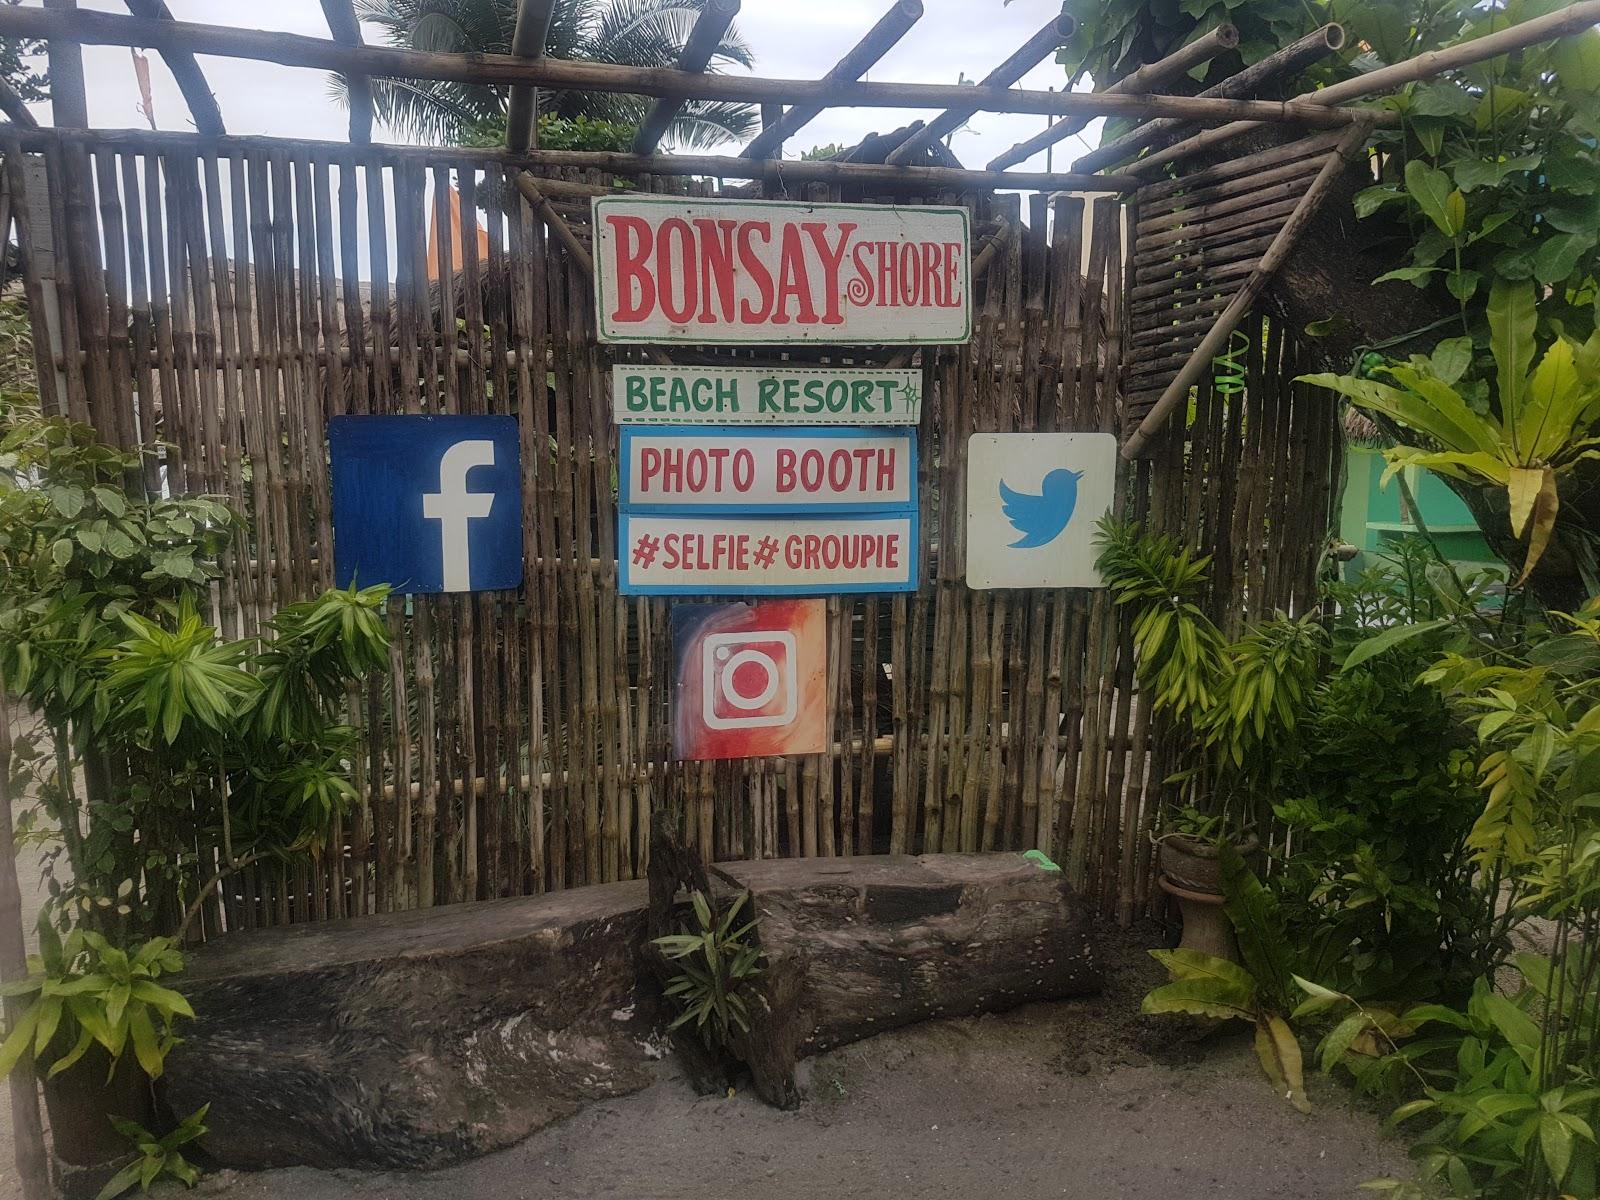 Sandee Bonsay Shore Beach Resort Photo